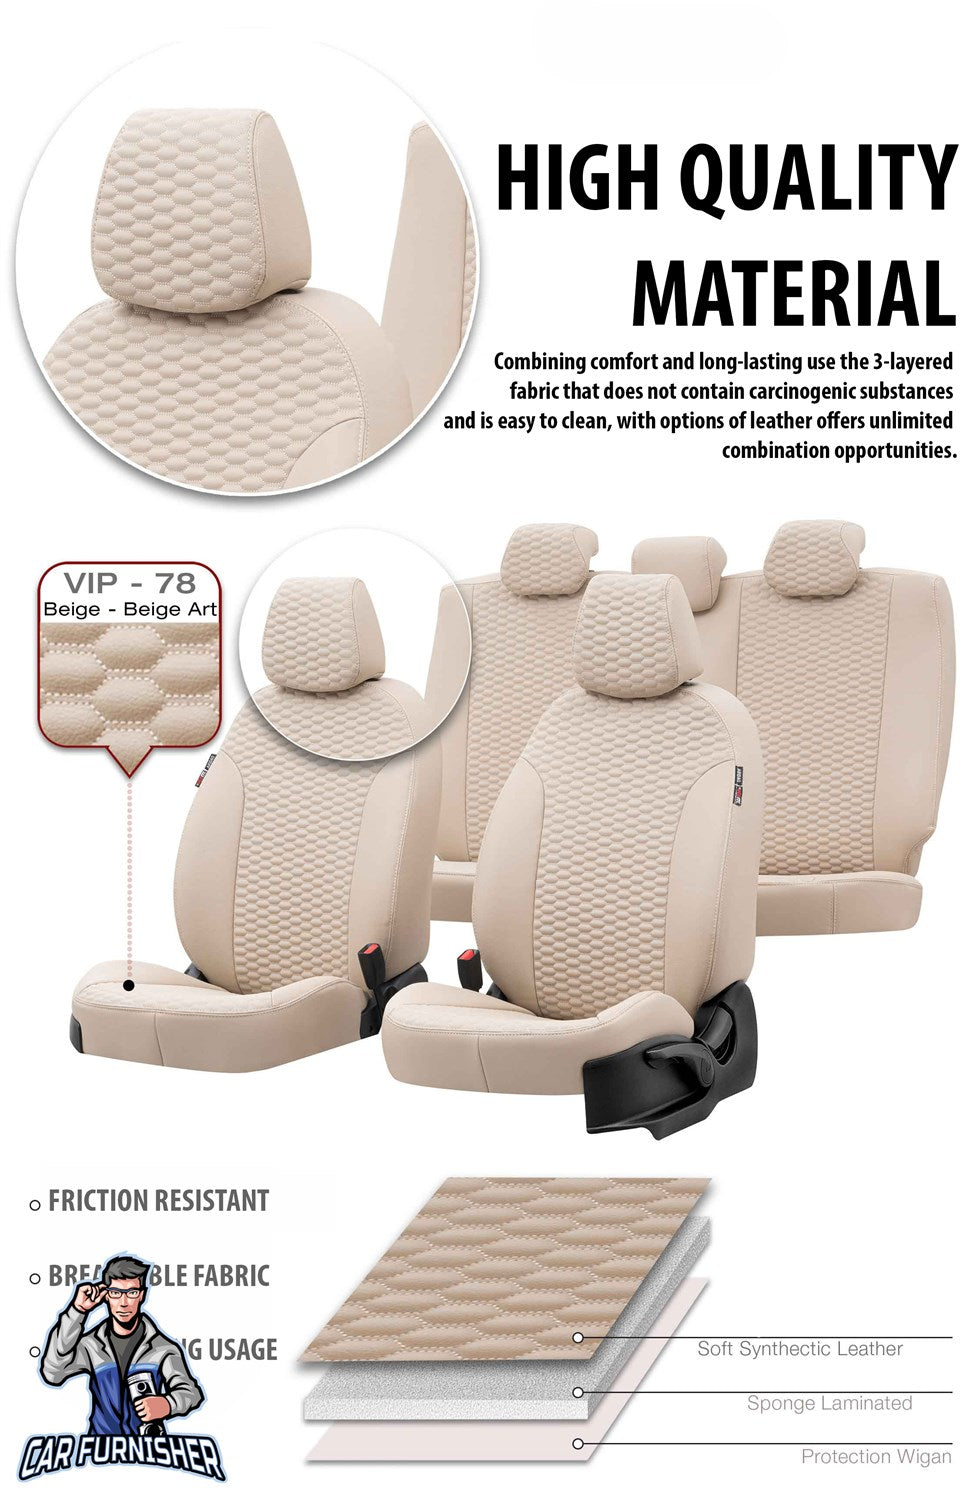 Landrover Freelander Car Seat Covers 1998-2012 Tokyo Design Ivory Leather